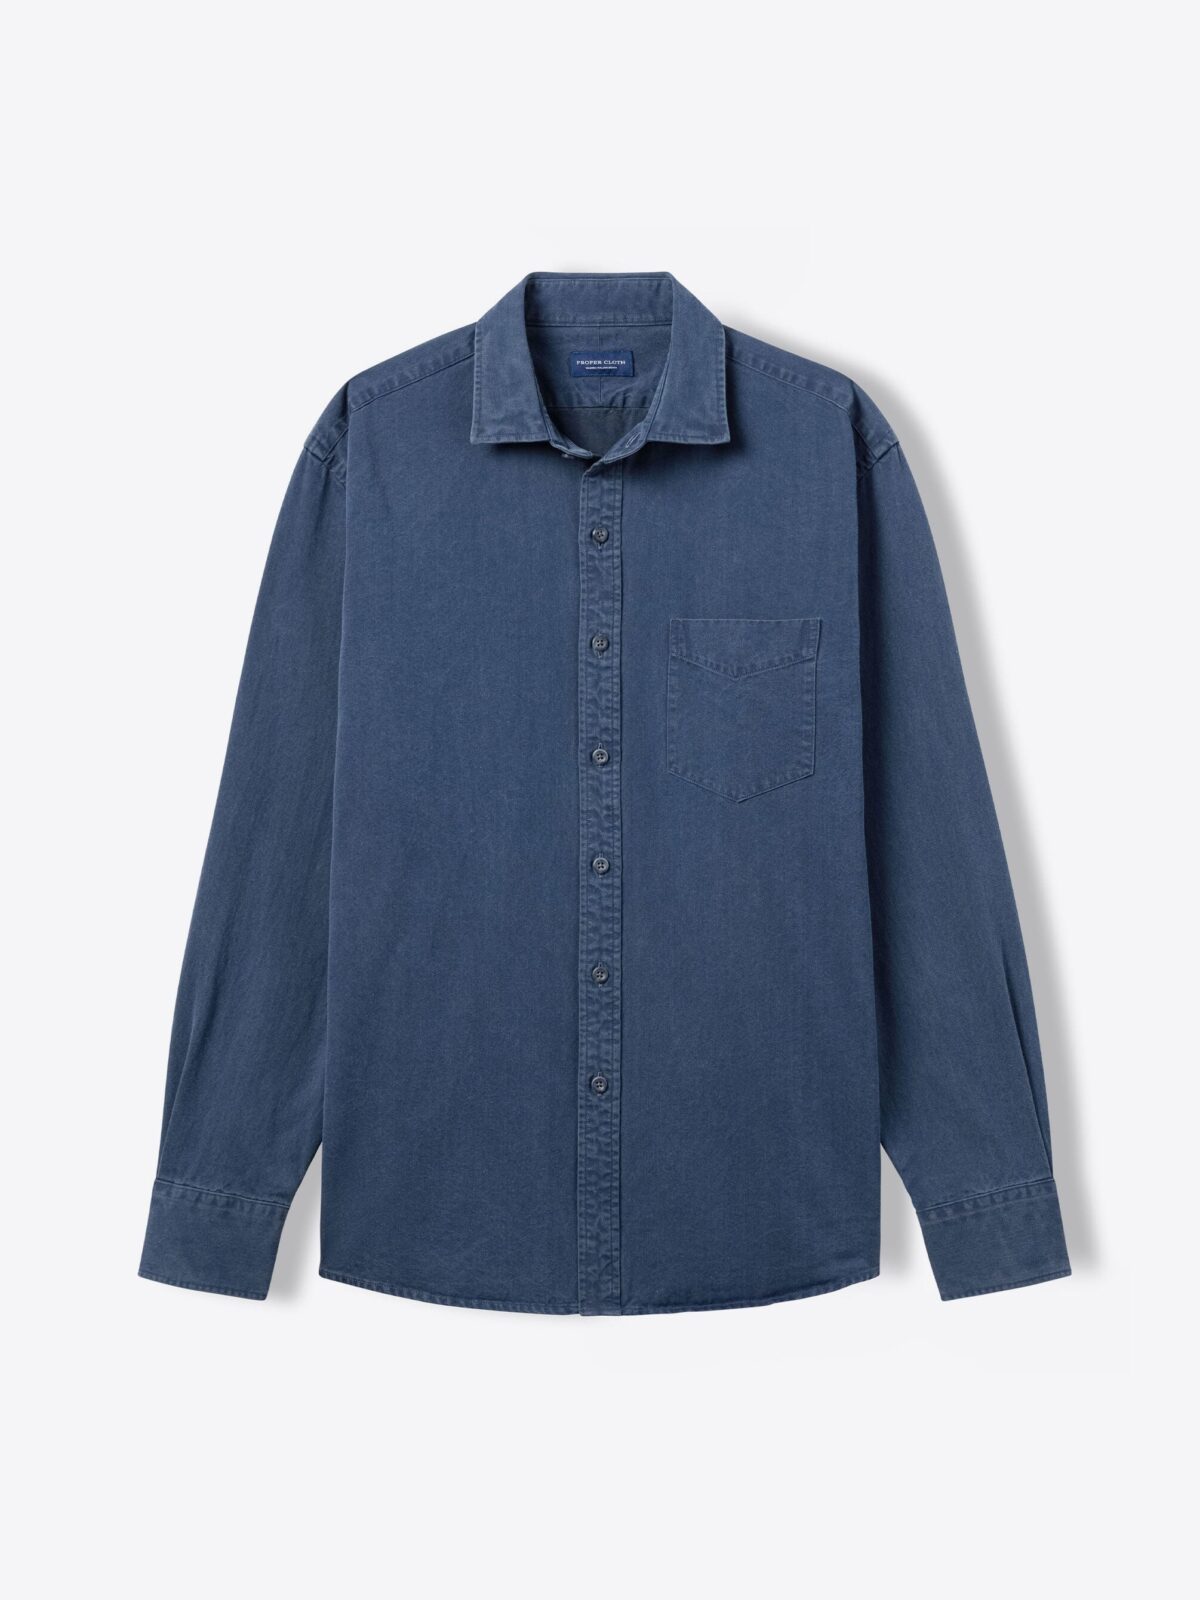 Albiate Washed Slate Blue Denim Shirt by Proper Cloth